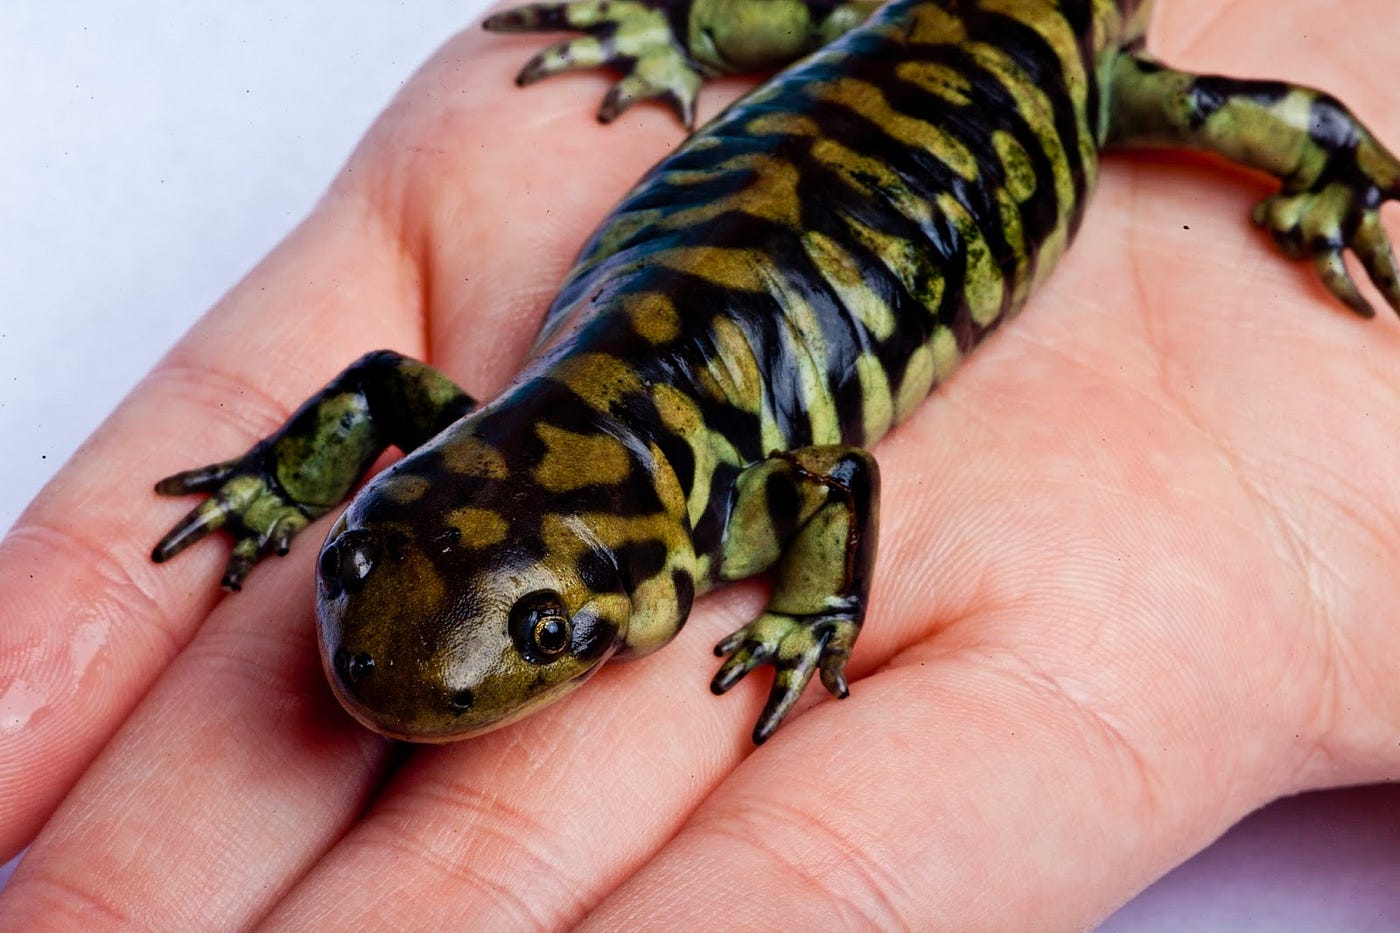 How I rescued my Tiger Salamander, by Jared Davidson